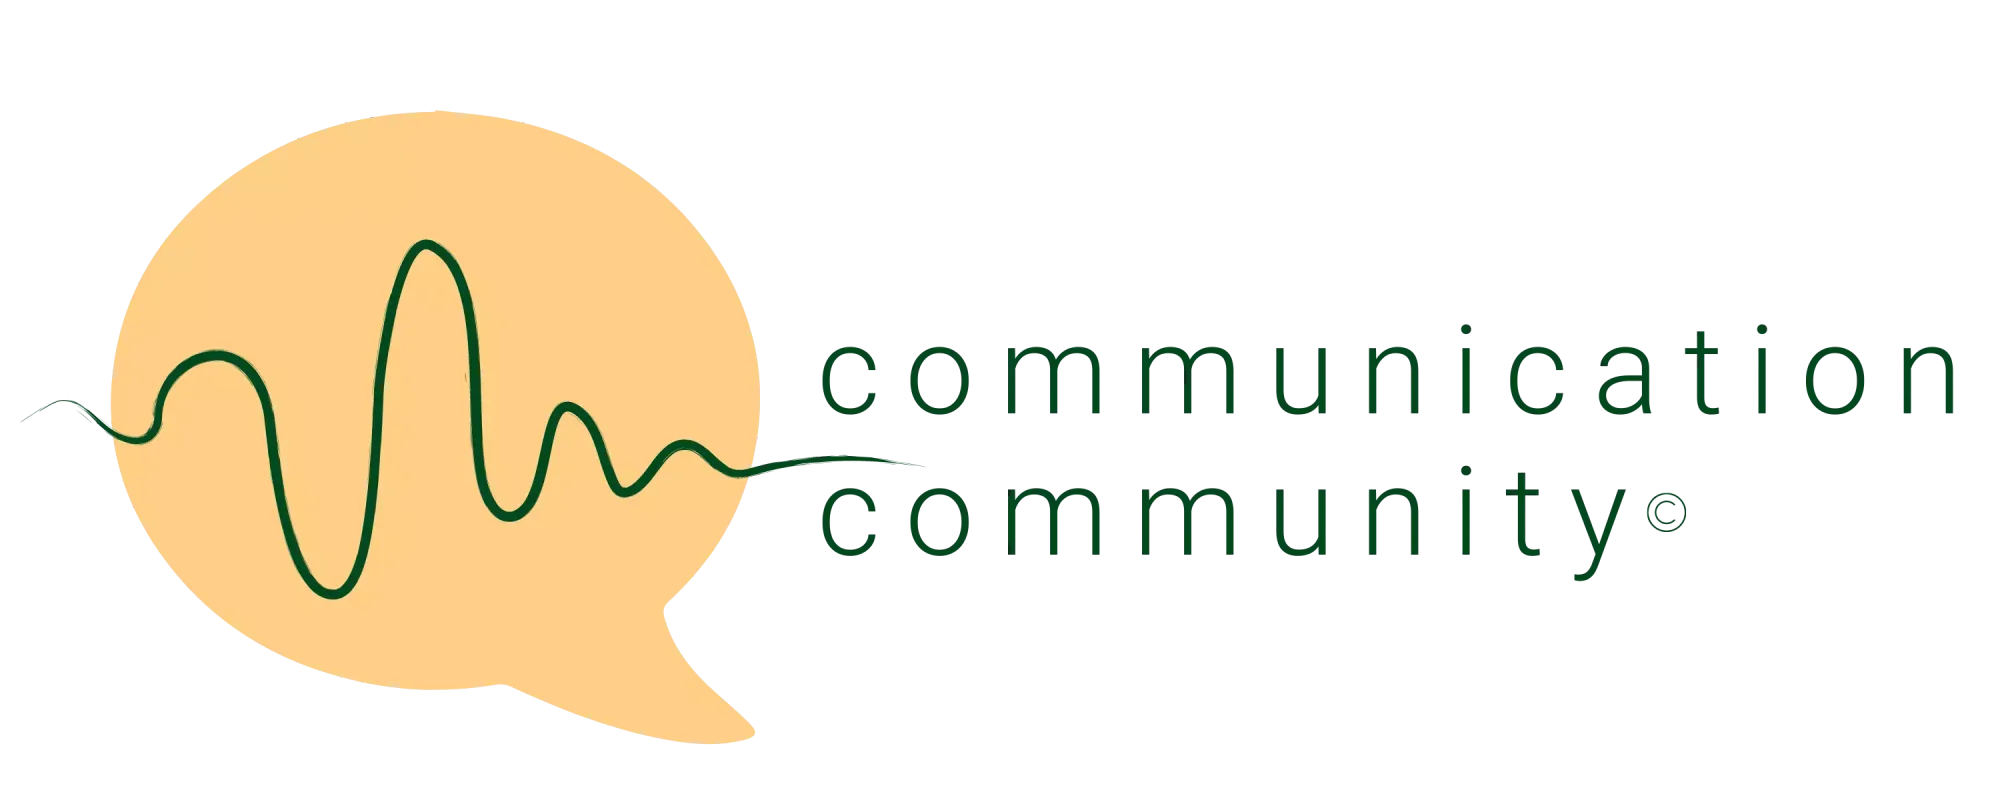 Communication Community